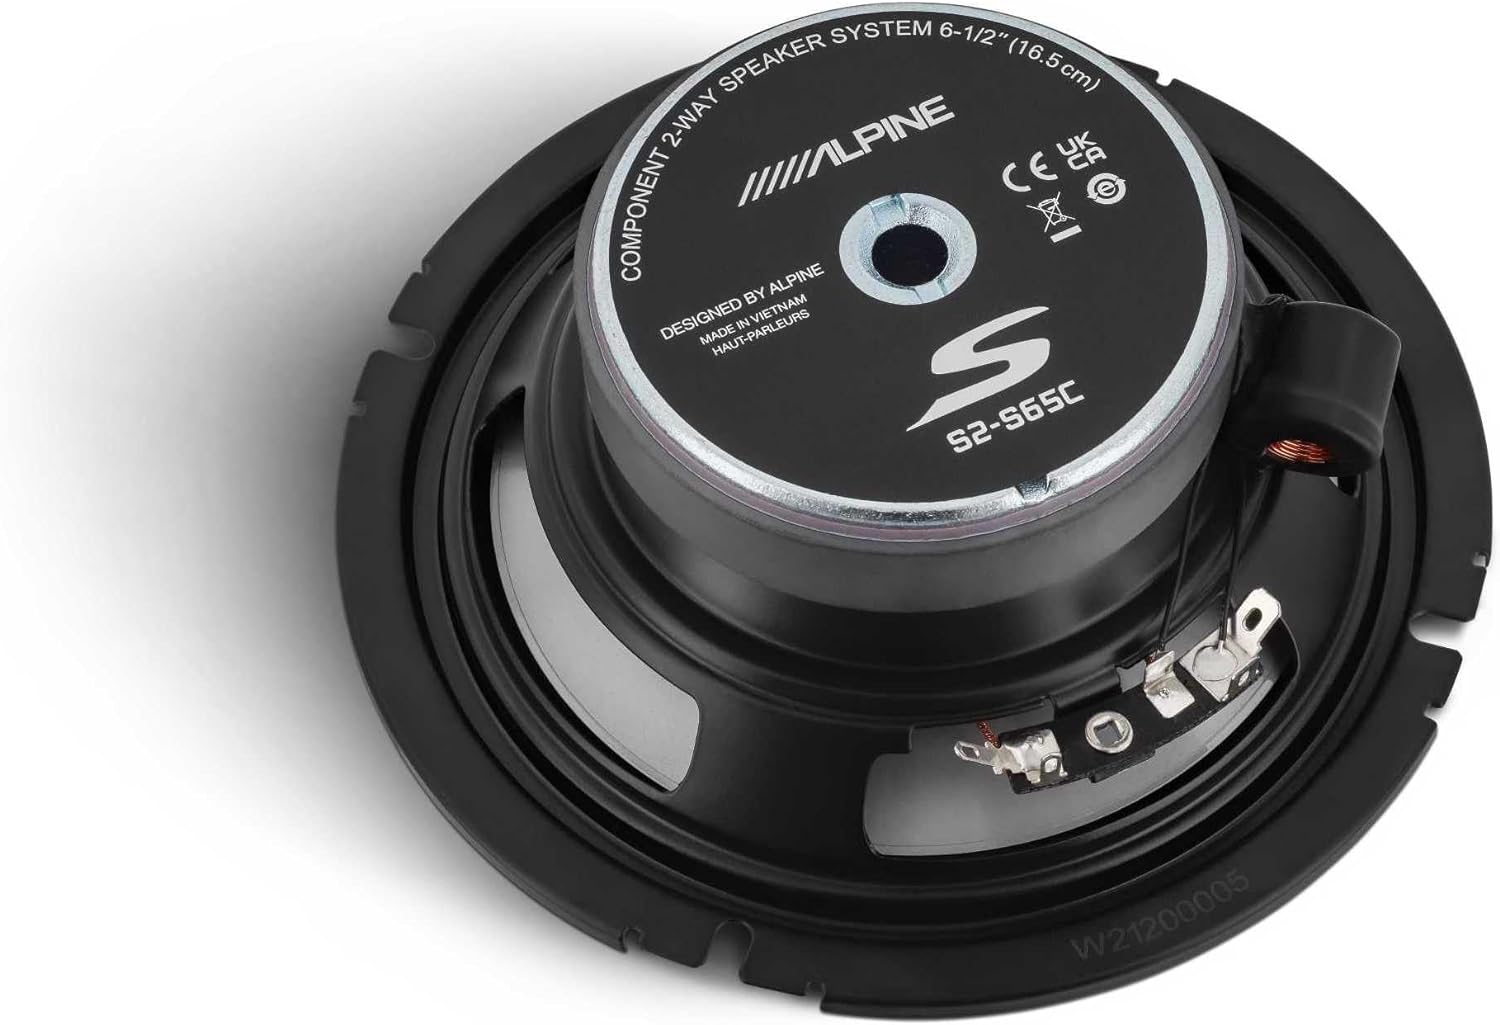 2 Pair Alpine S2-S65C 6-1/2" Component 2-Way Speaker System Bundle